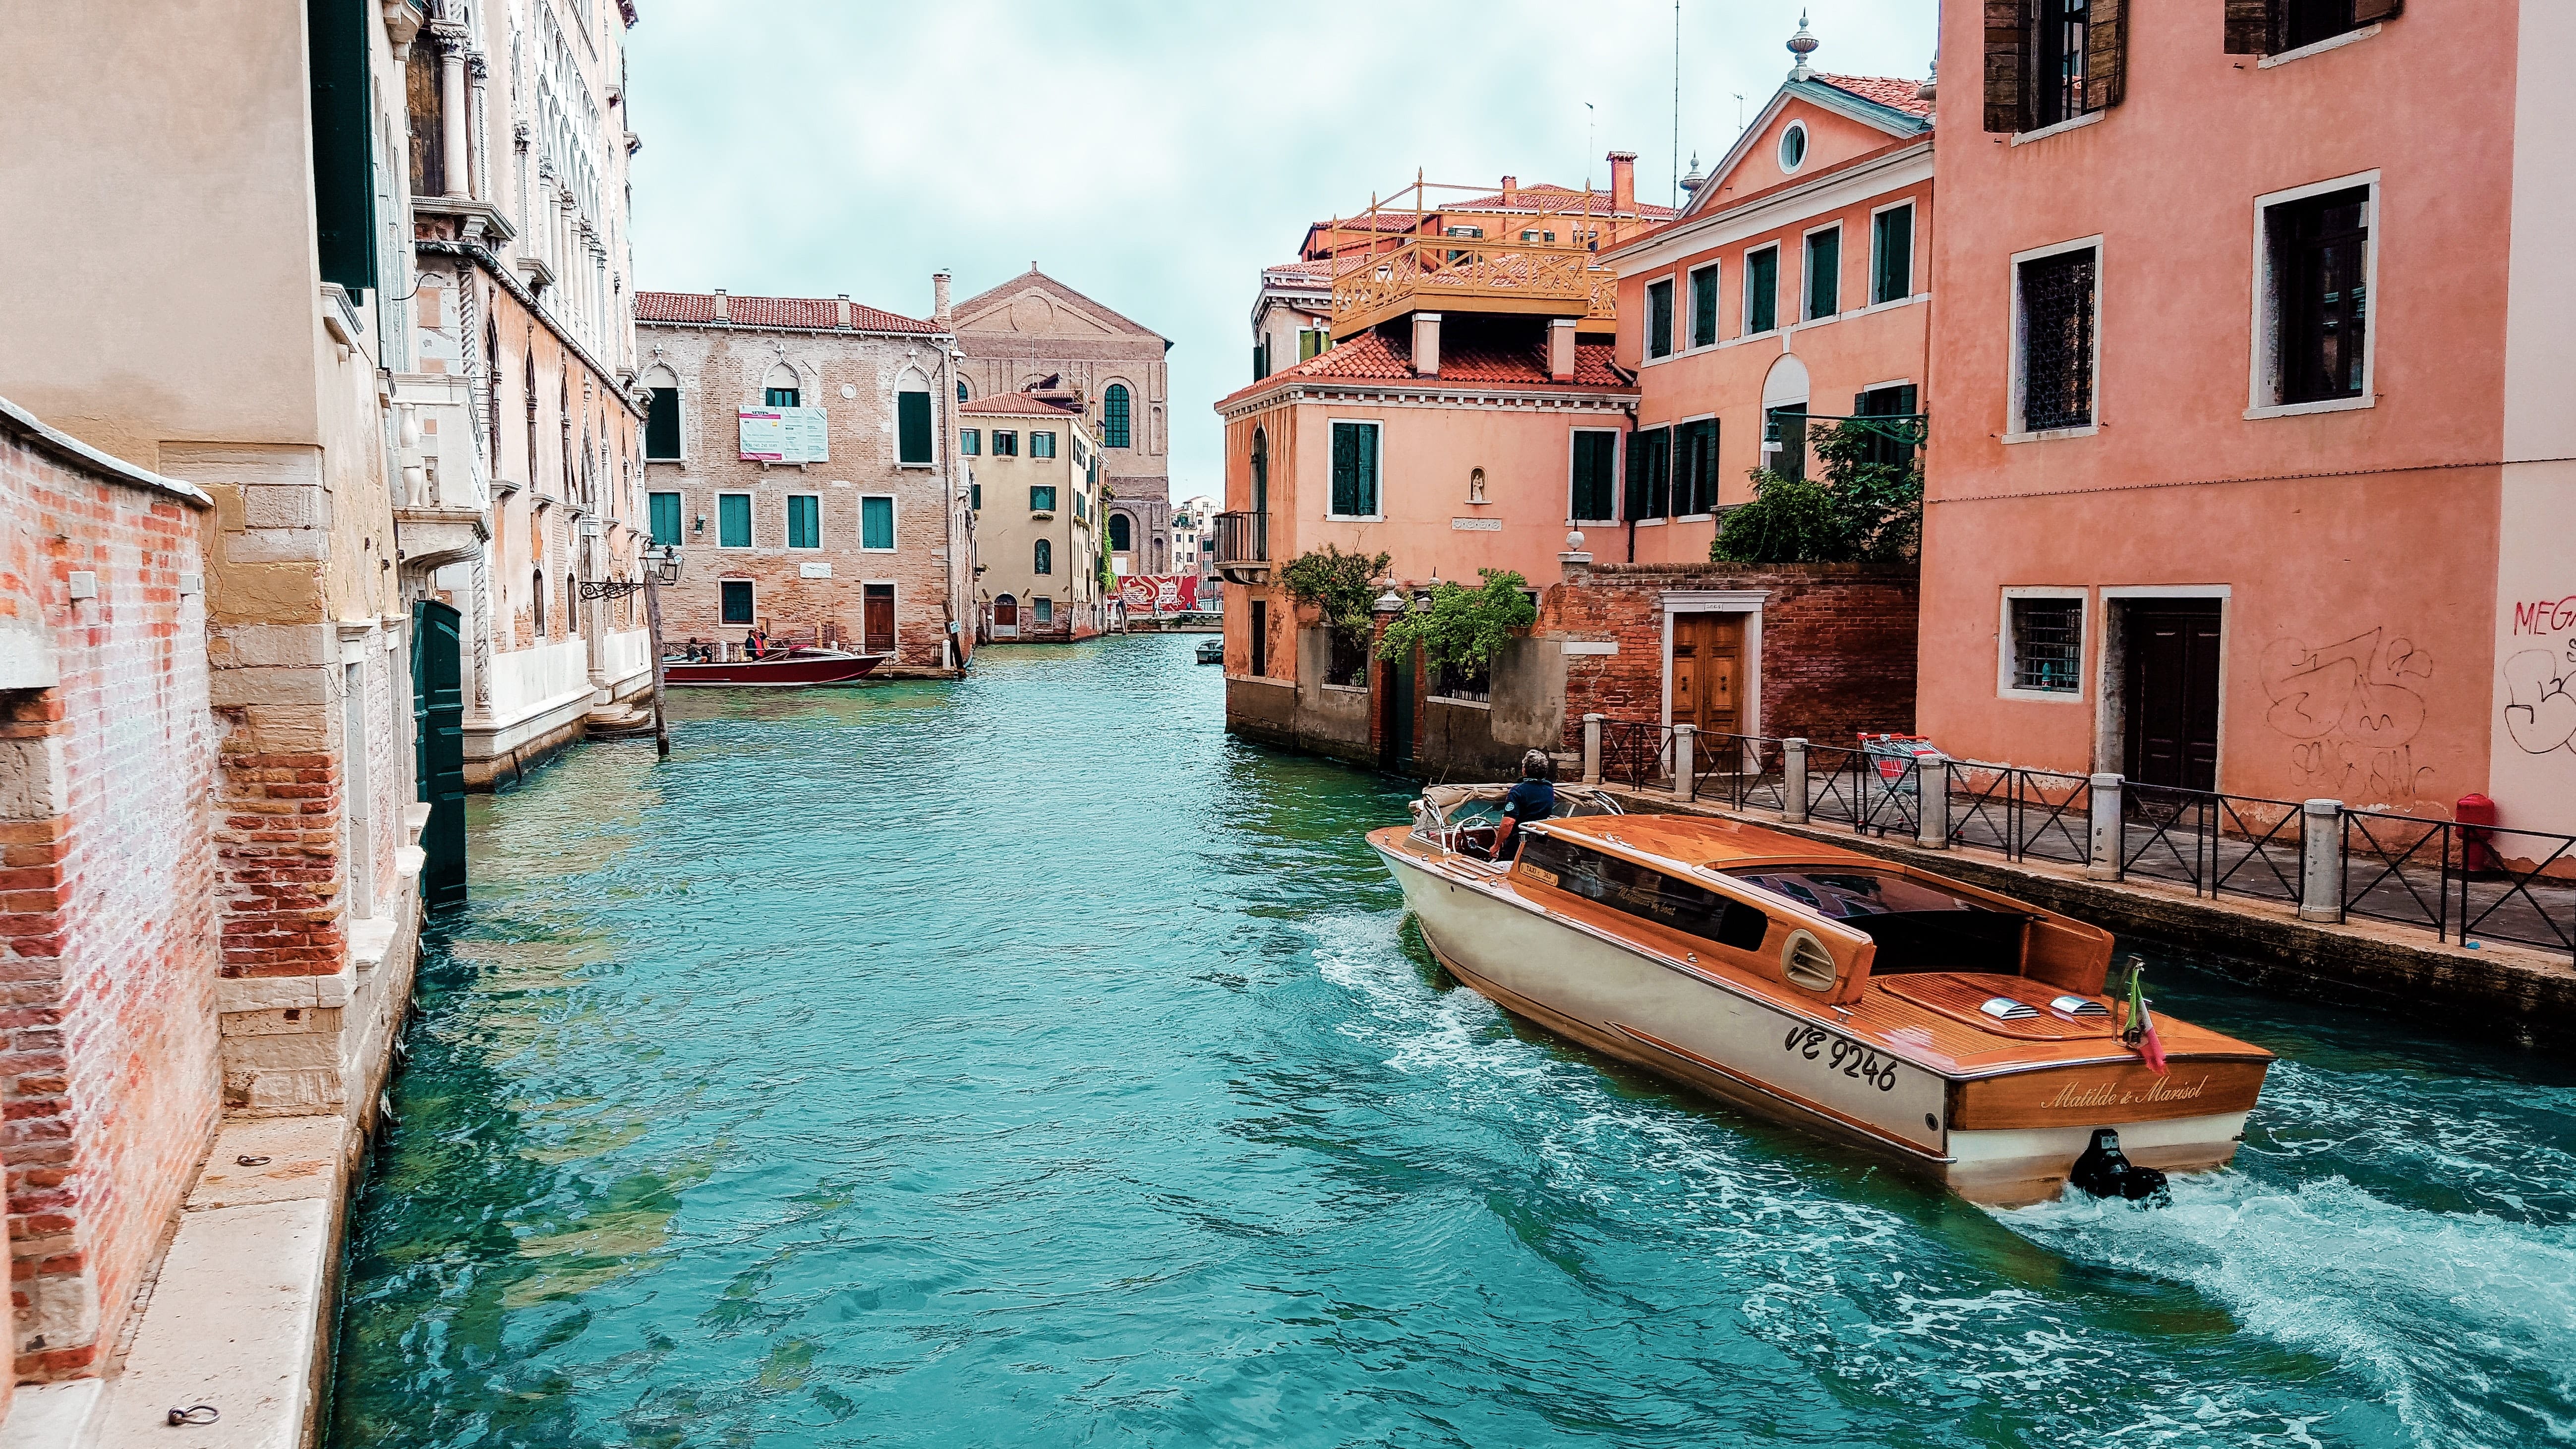 Город на реке в италии. Венеция Италия. Бирюзовый канал, Венеция, Италия. Река в Венеции. Ла-Маддалена Венеция.